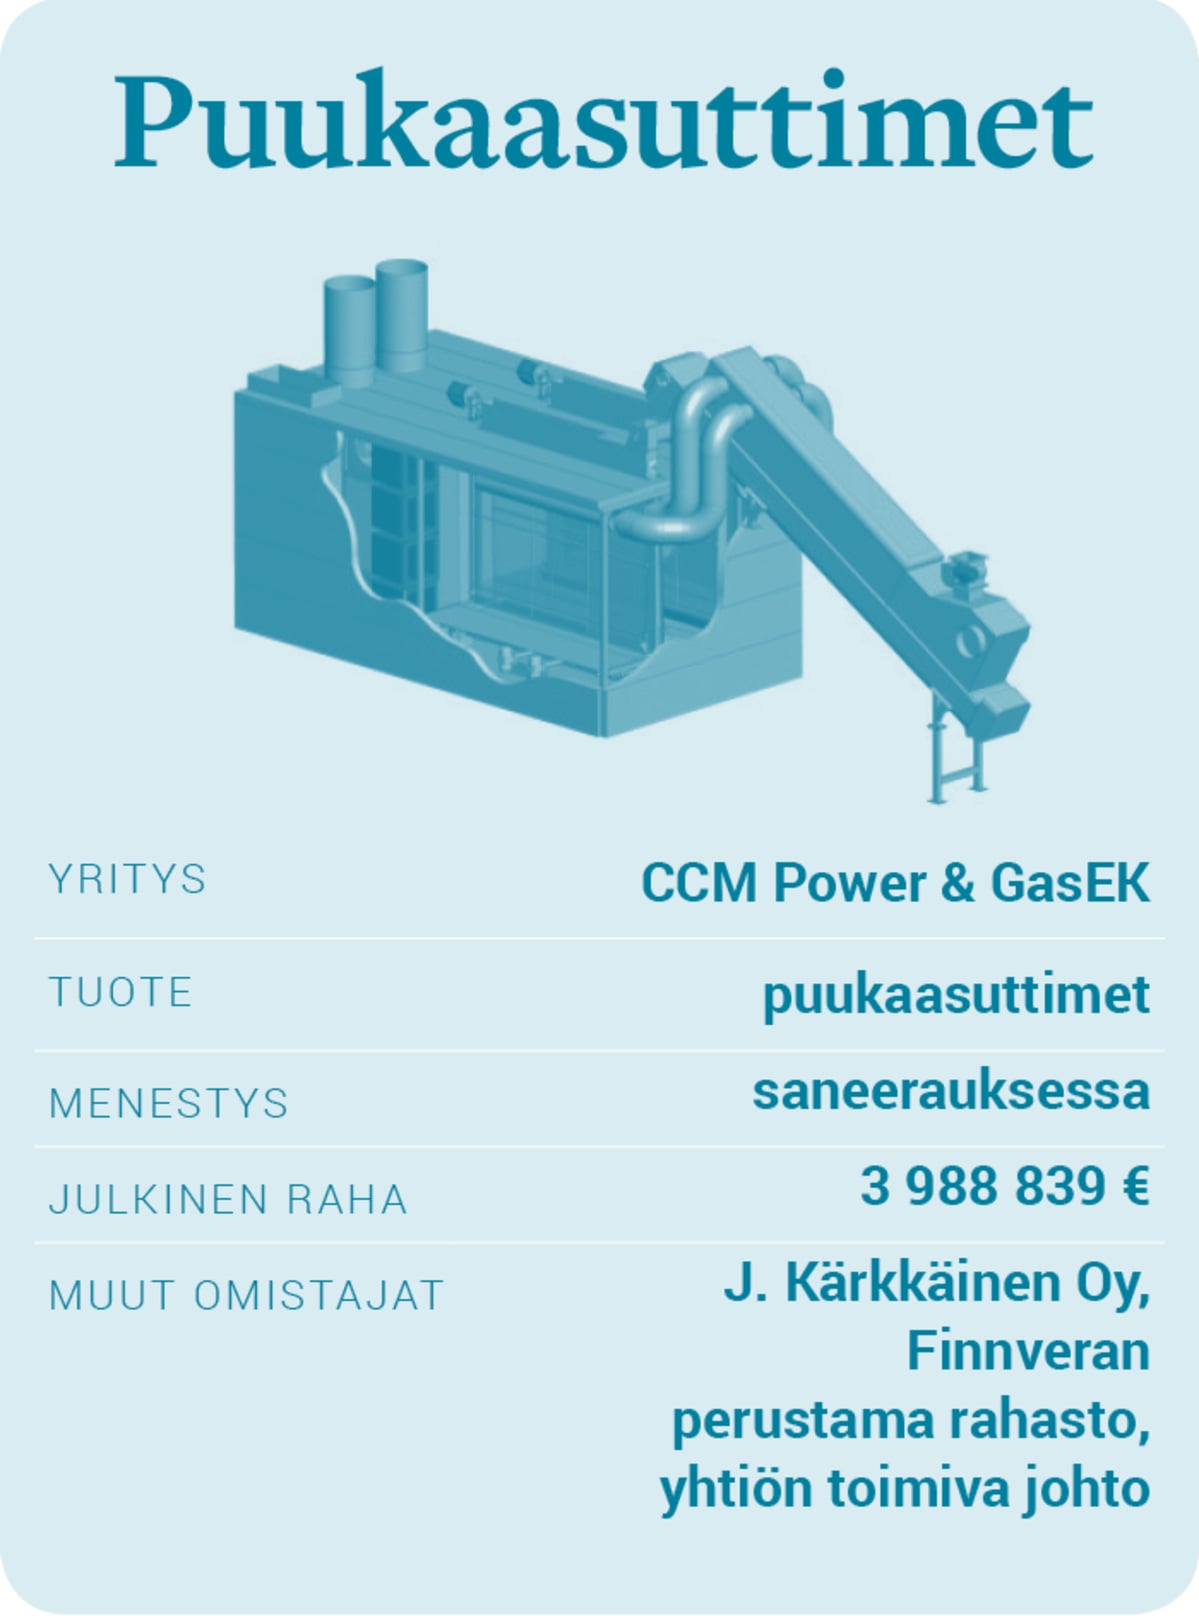 CCM Power ja GasEK -puukaasuttimet.